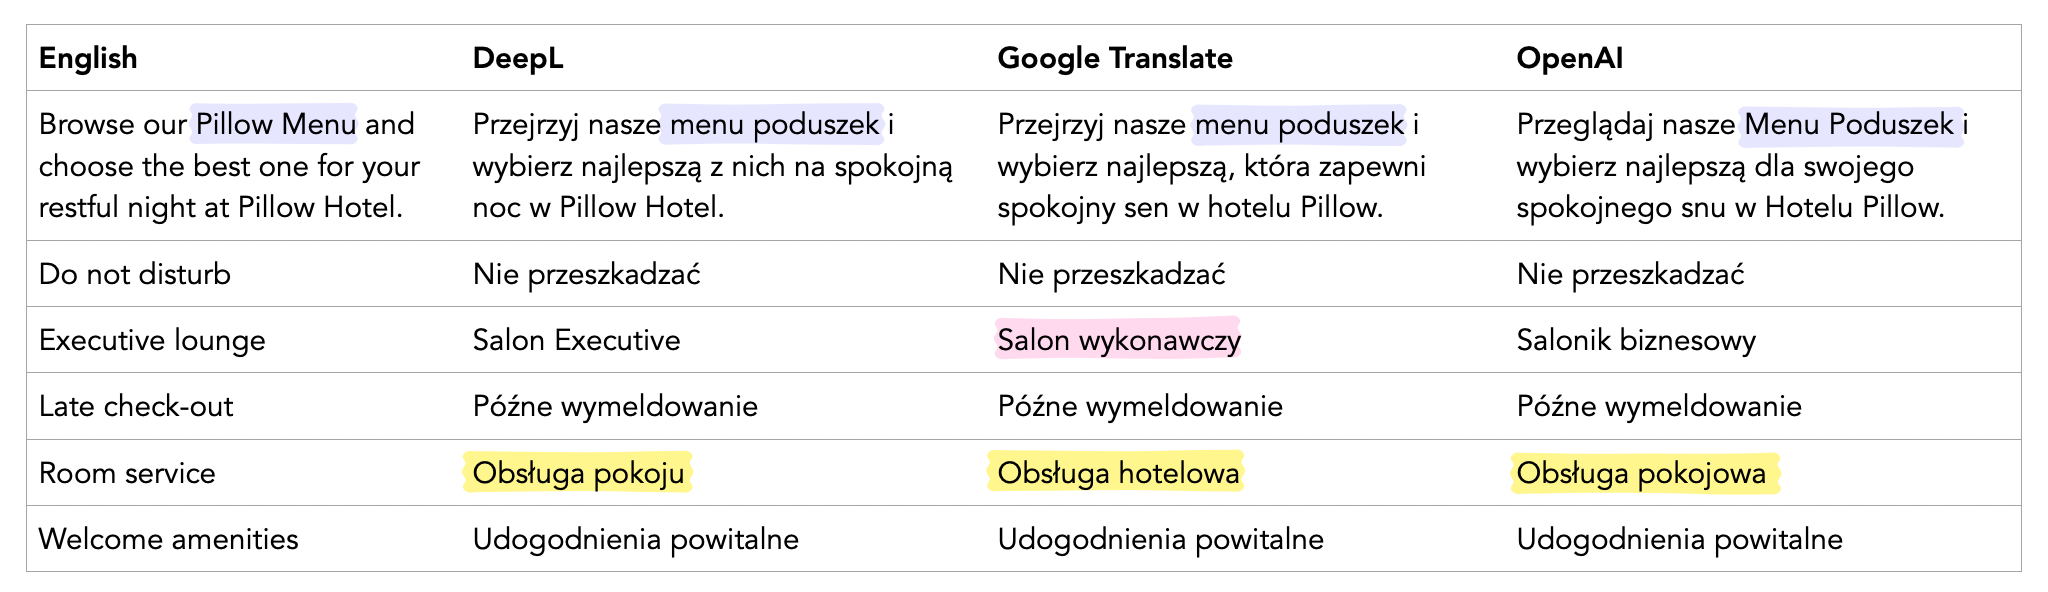 Comparison of translations to Polish